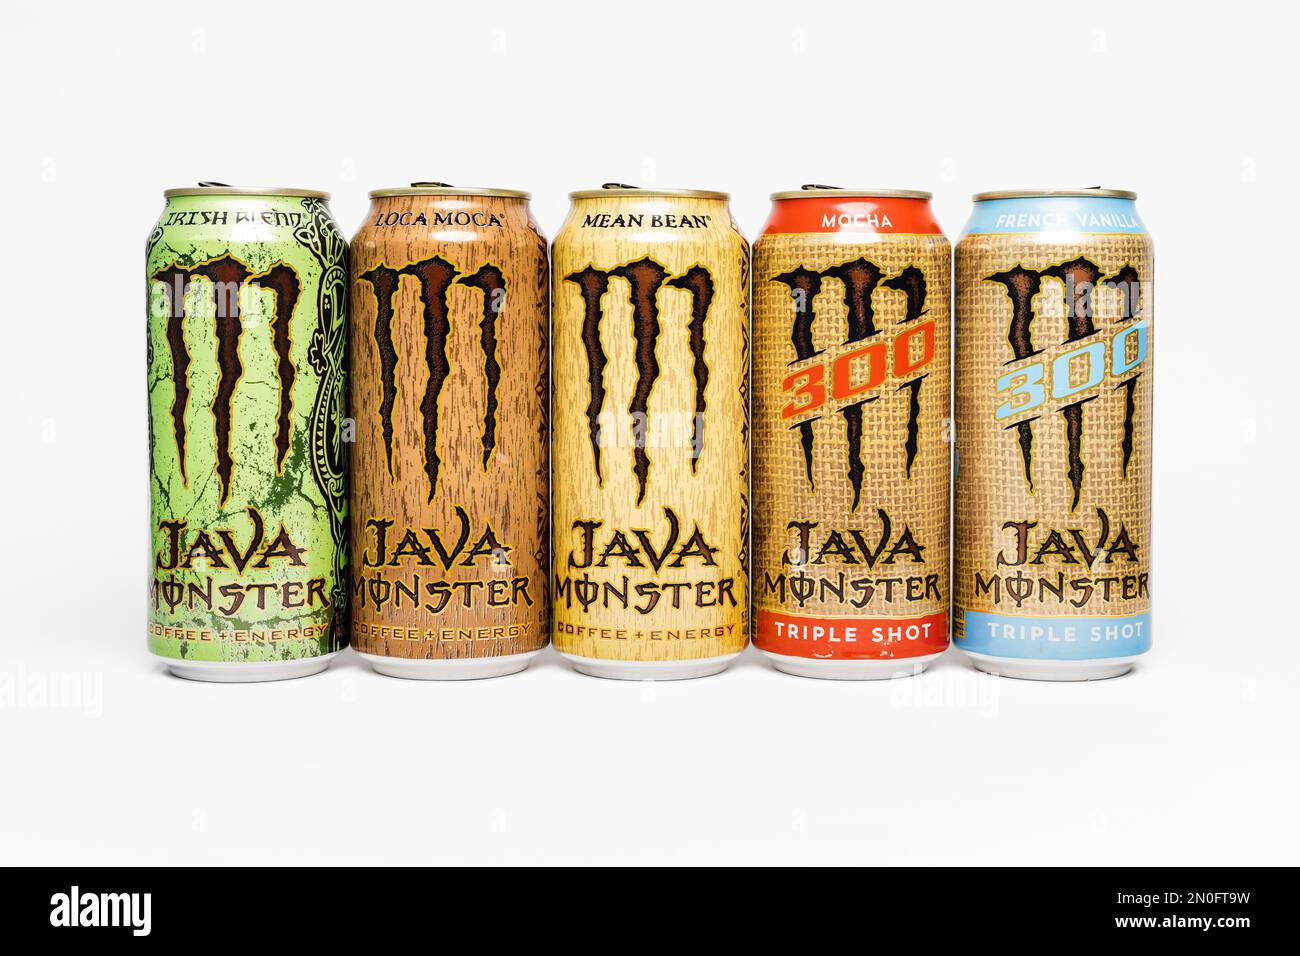 Monster Java mixt Getränke in verschiedenen Geschmacksrichtungen. 5 American Monster Energy Kaffeedosen hintereinander. Irische Mischung, Loca Moca, Mean Bean, Mocha. Stockfoto